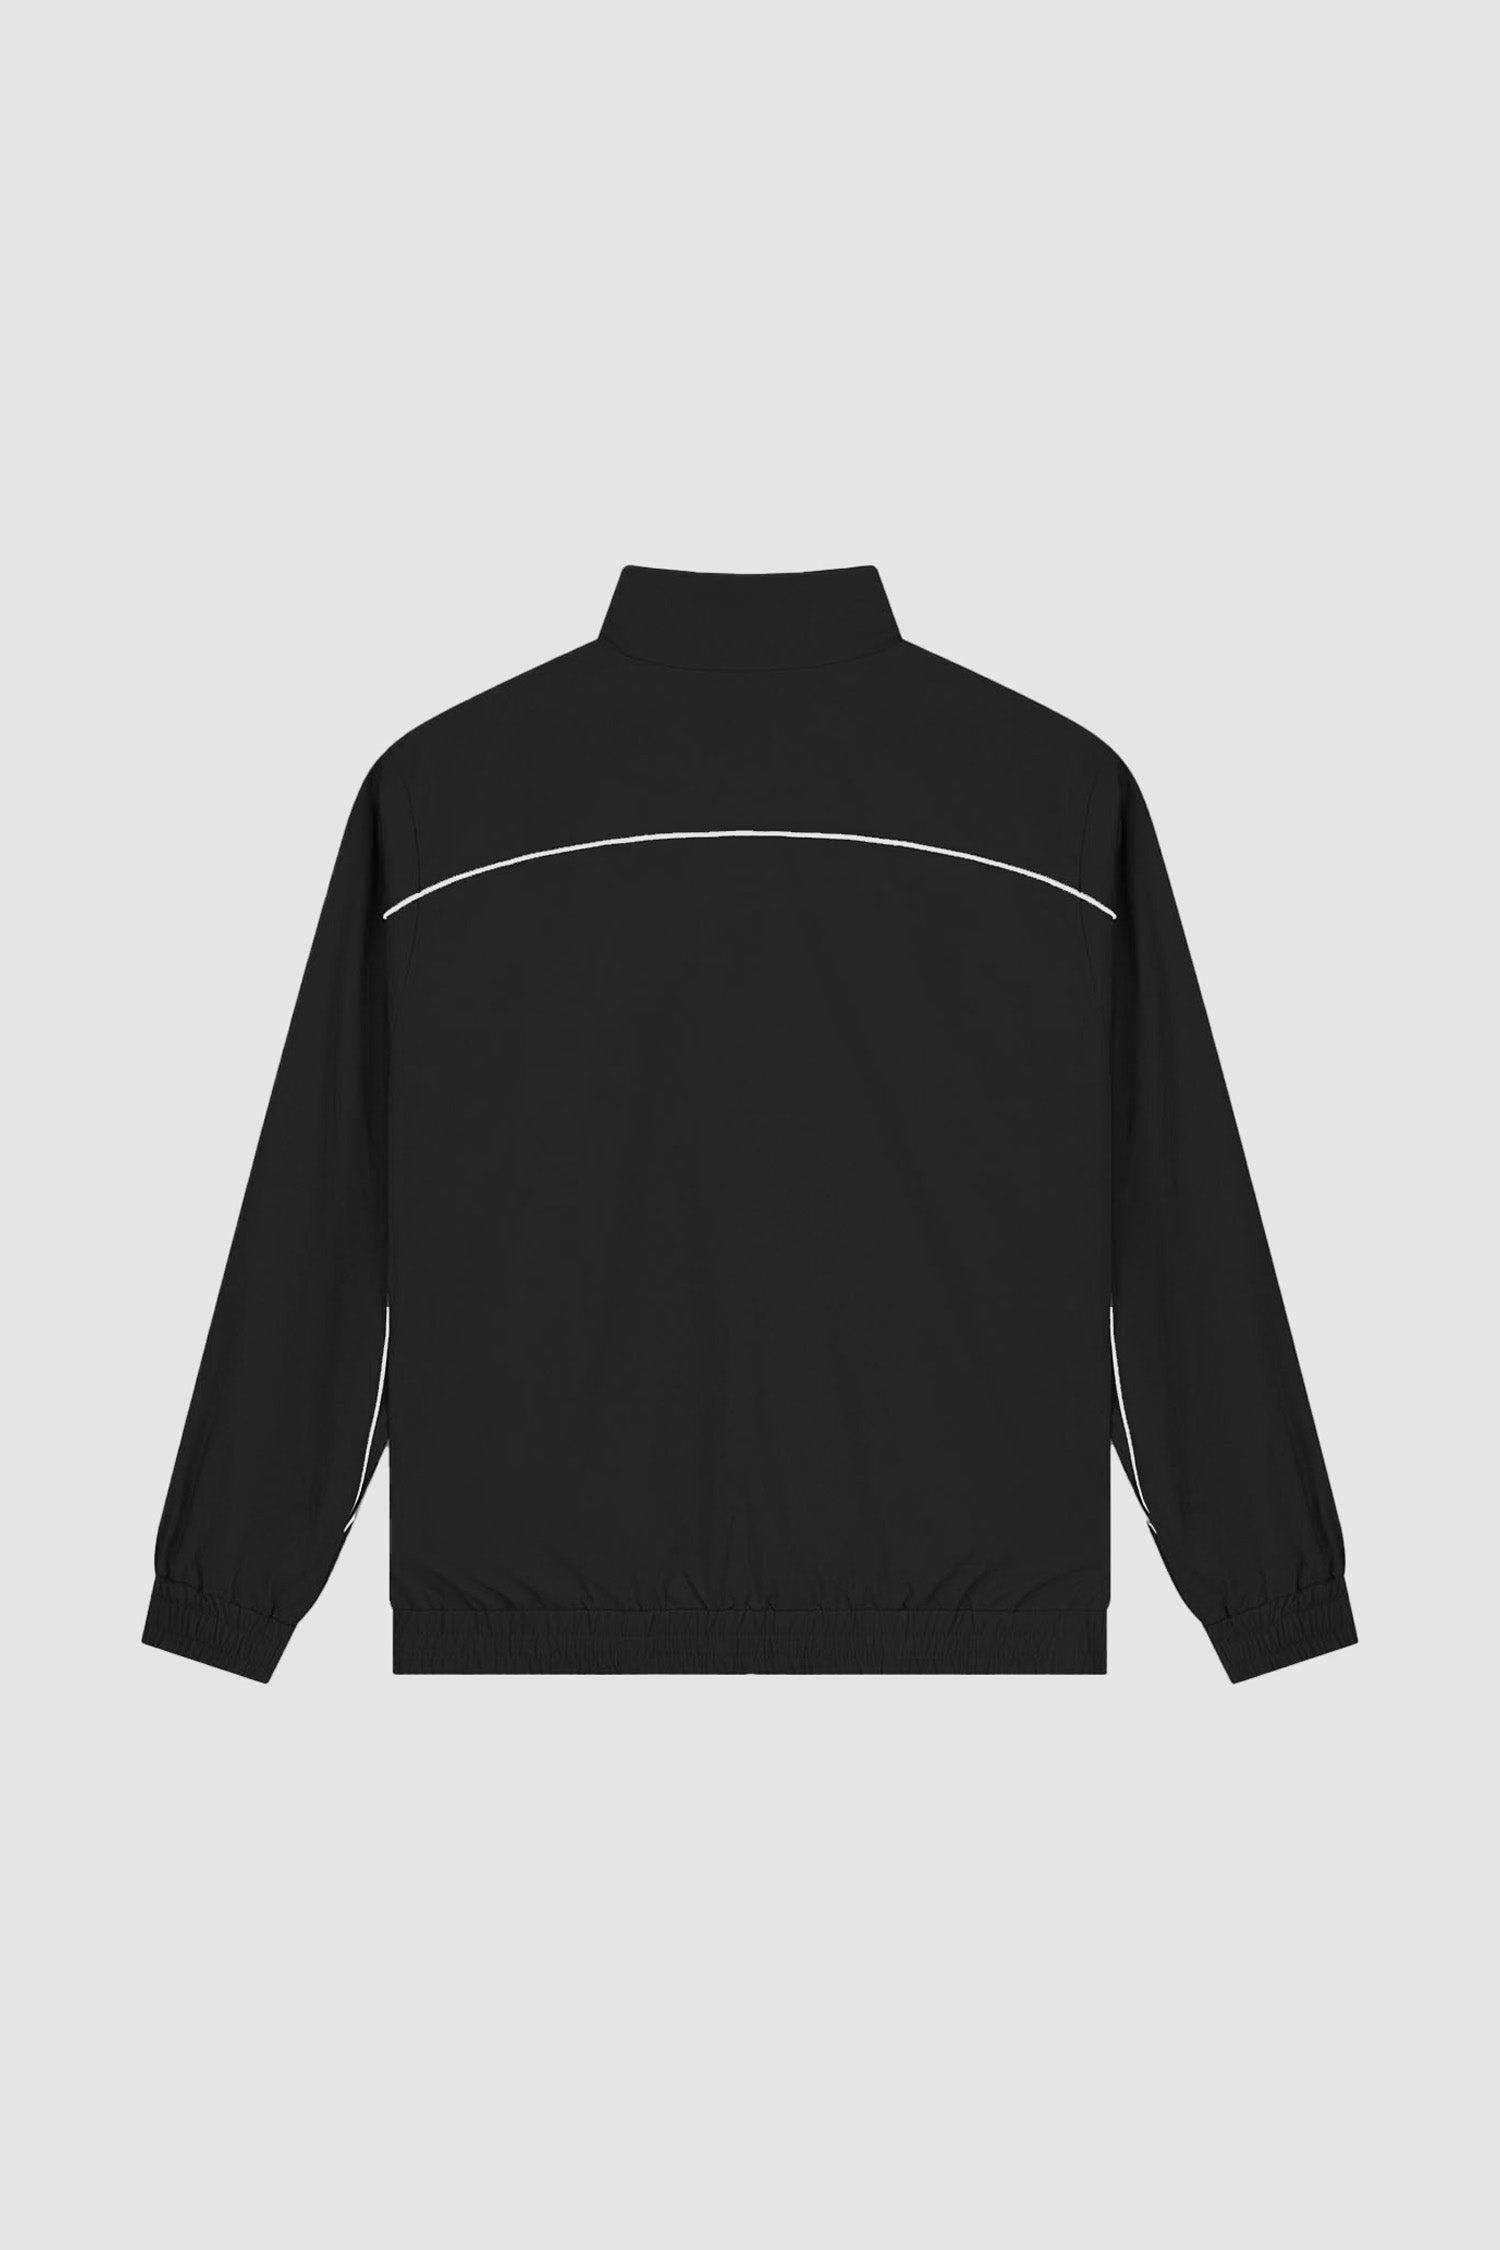 Jordan AW23 Jacket - Black/Grey